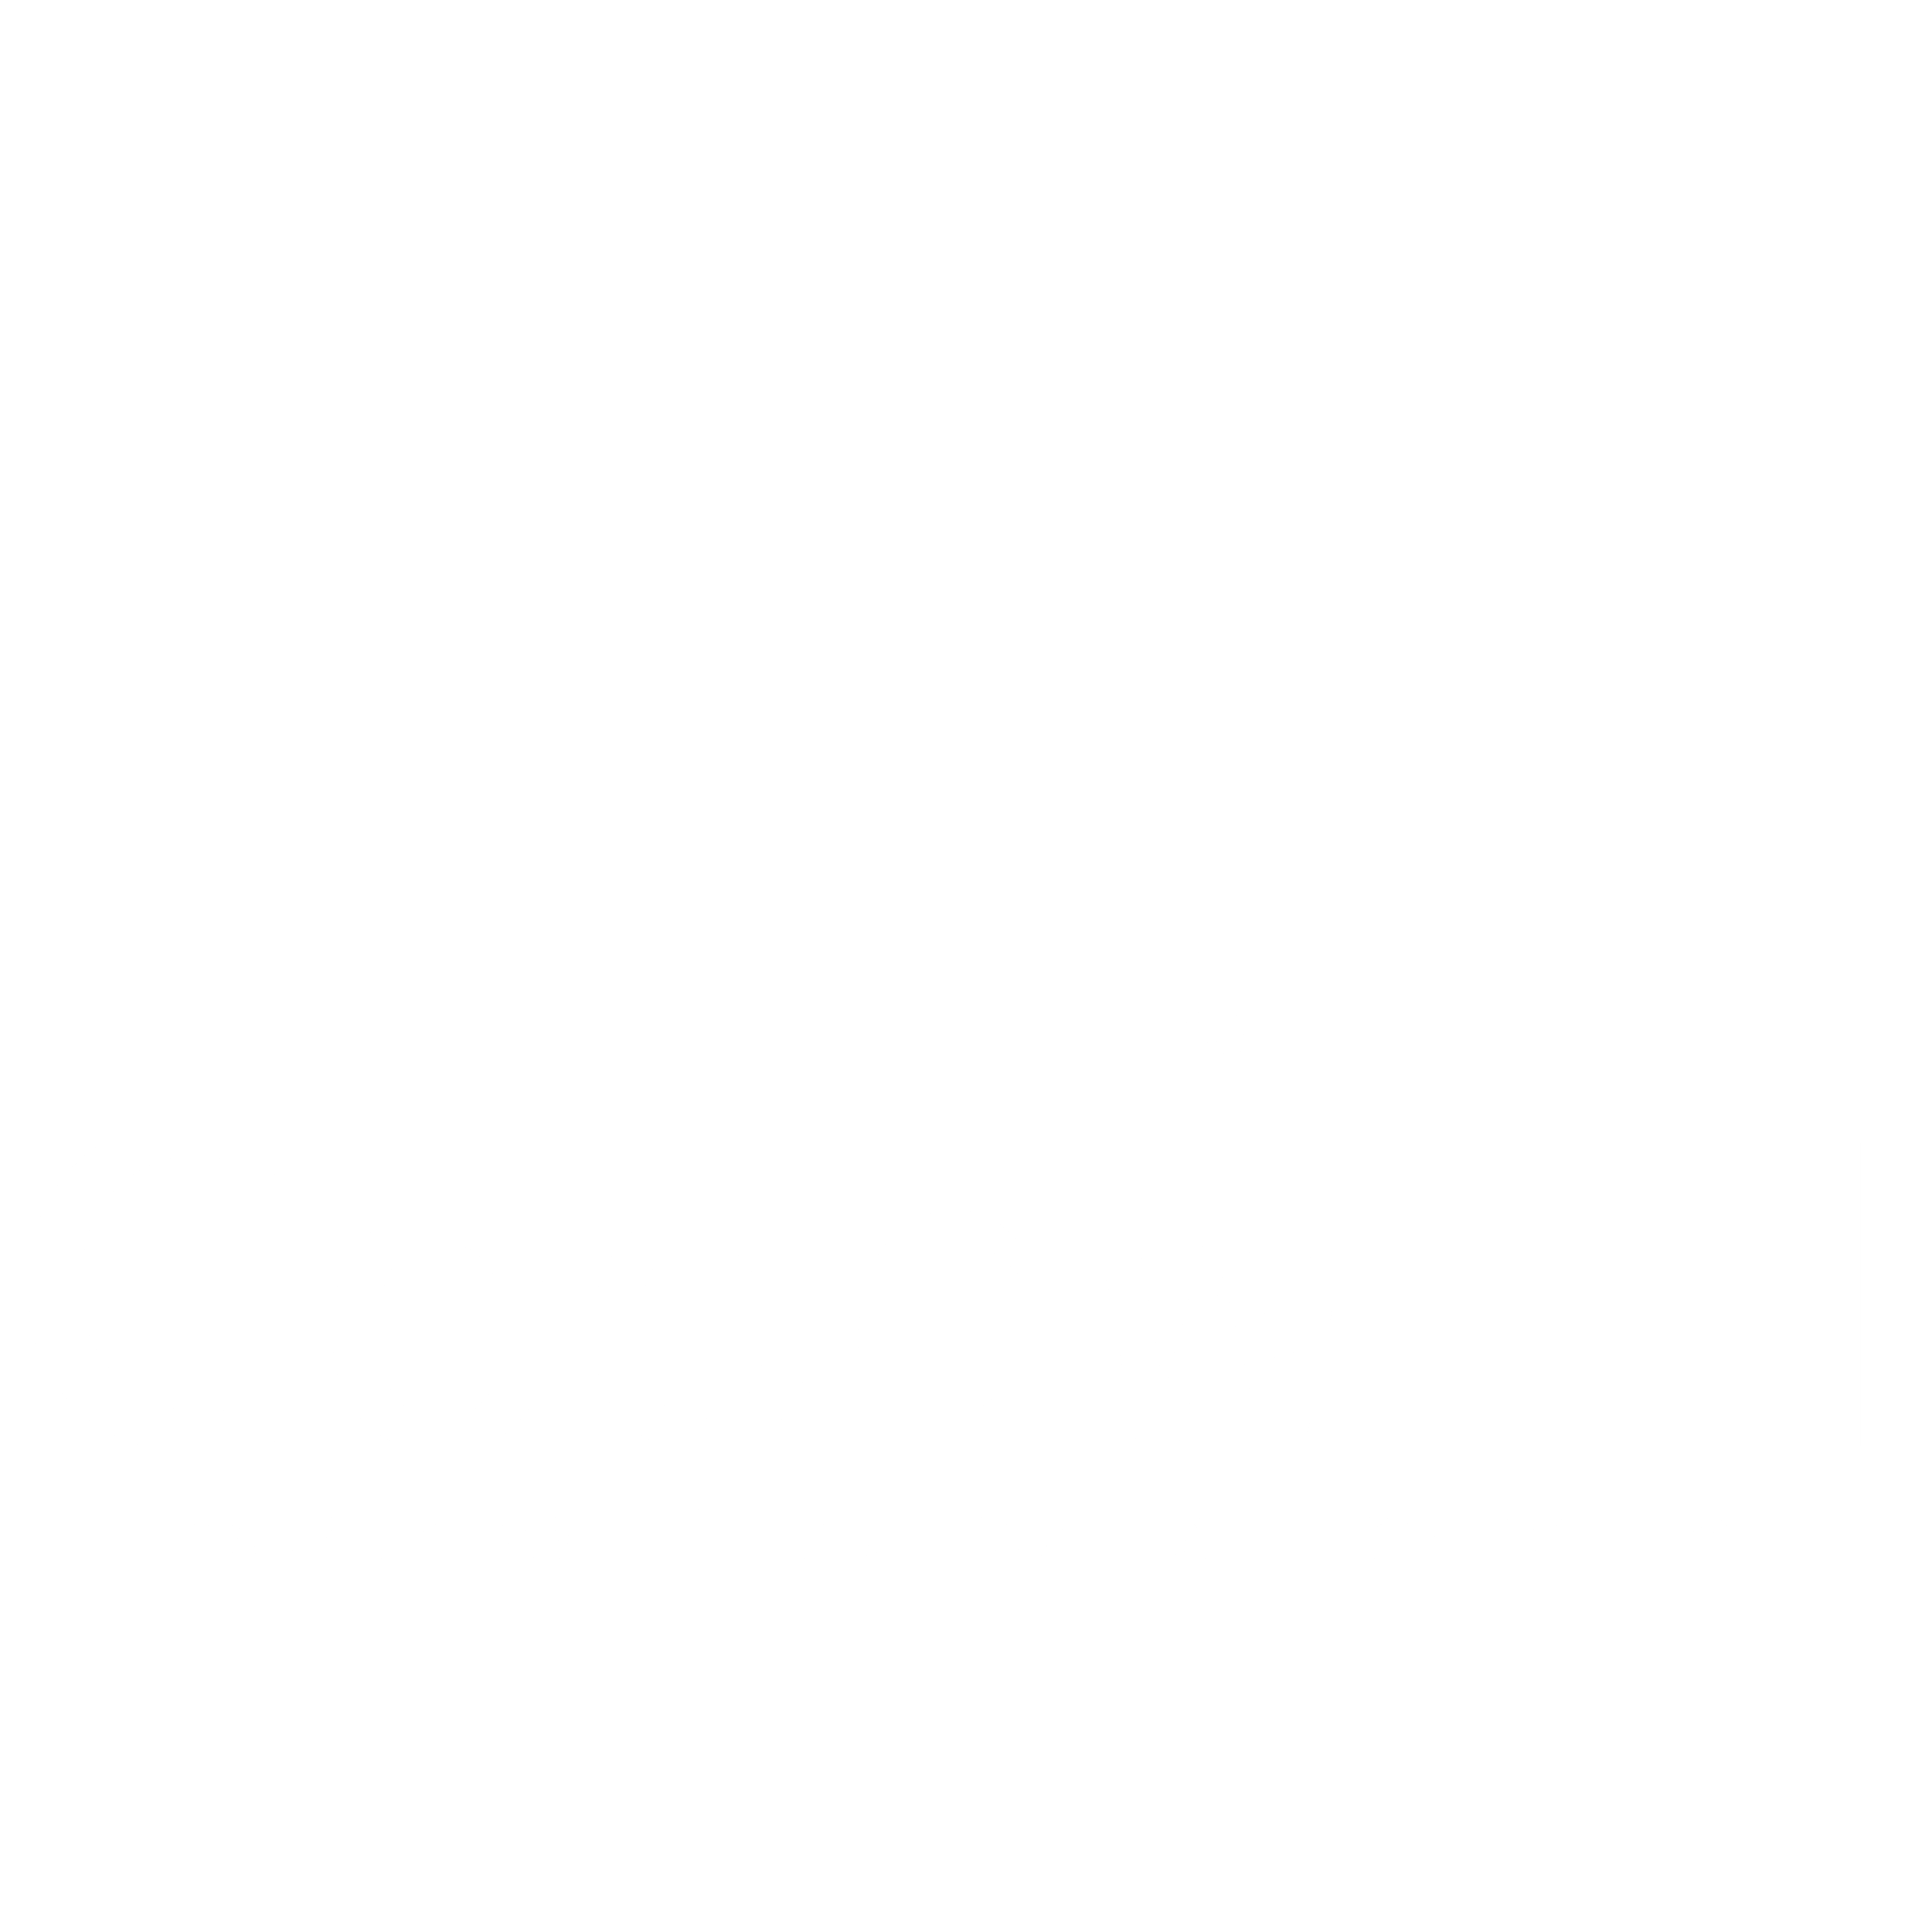 Goodwill Logo - Goodwill Logo PNG Transparent & SVG Vector - Freebie Supply